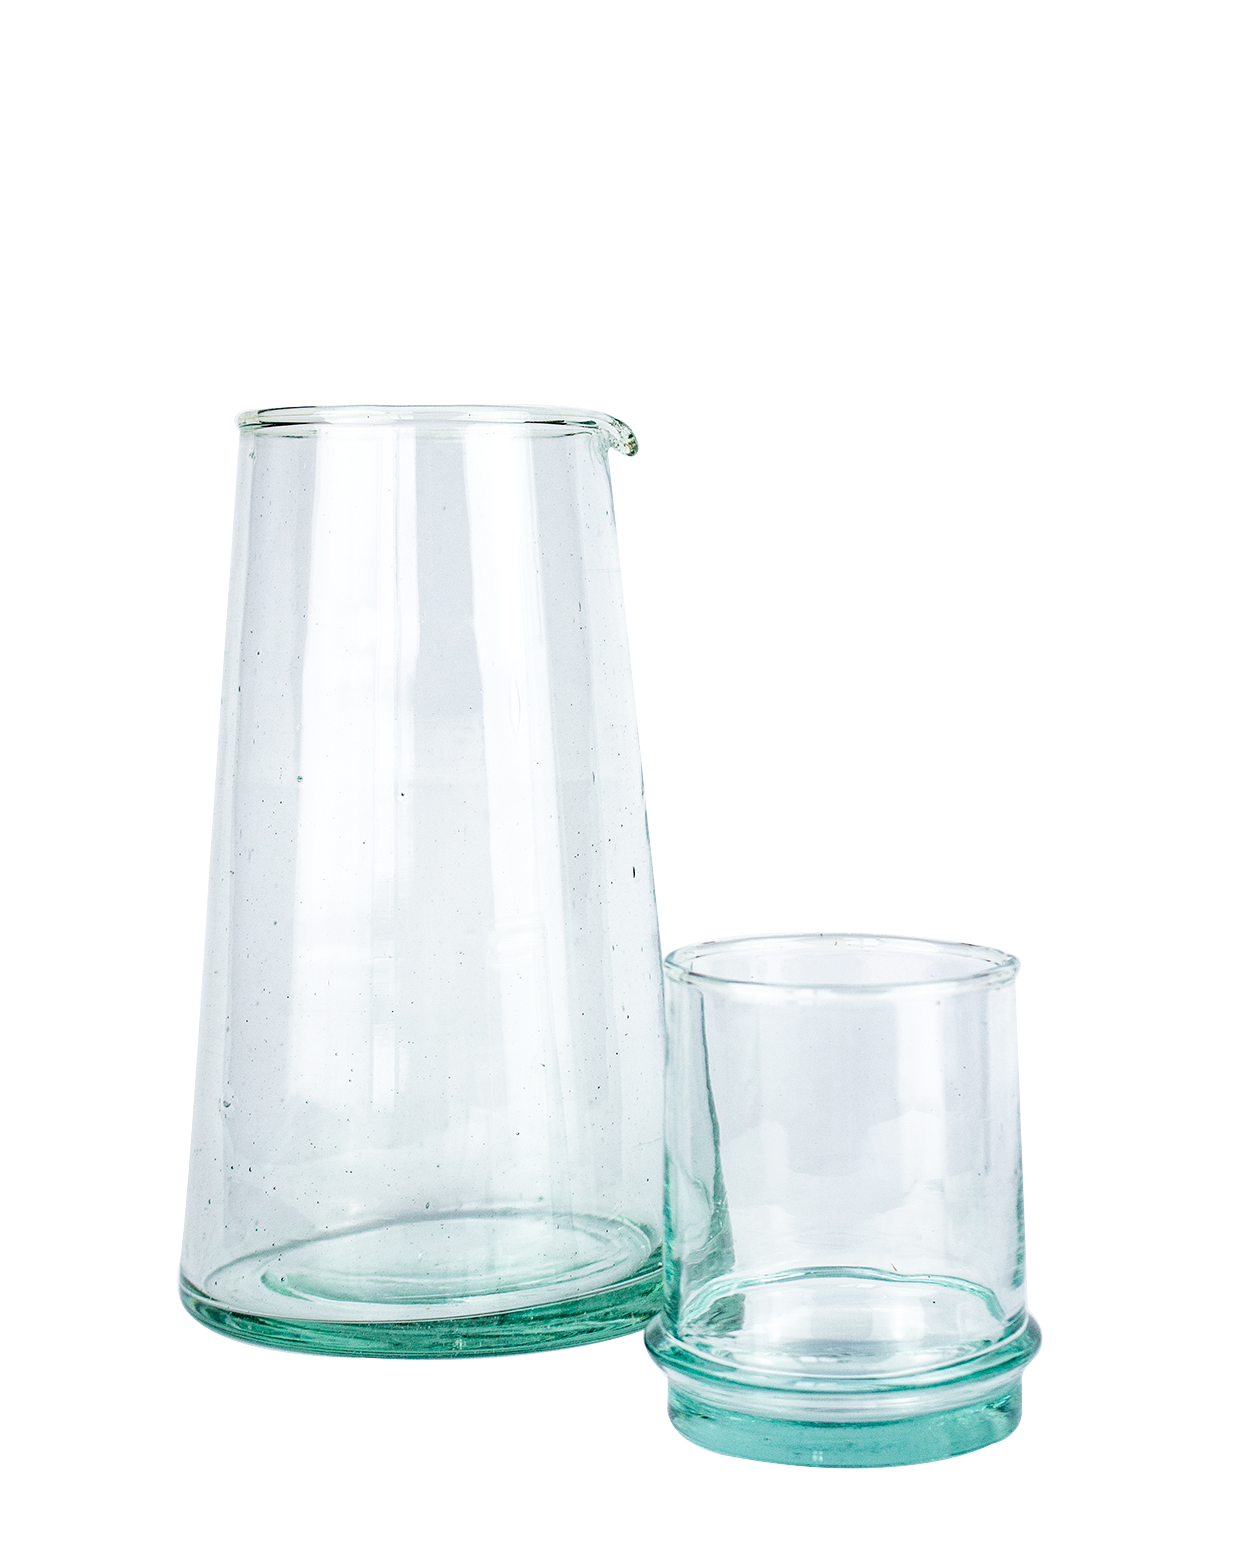 SAUNDERS DIVIDEND CARAFE - HAND-BLOWN GLASS, 4oz (118ml